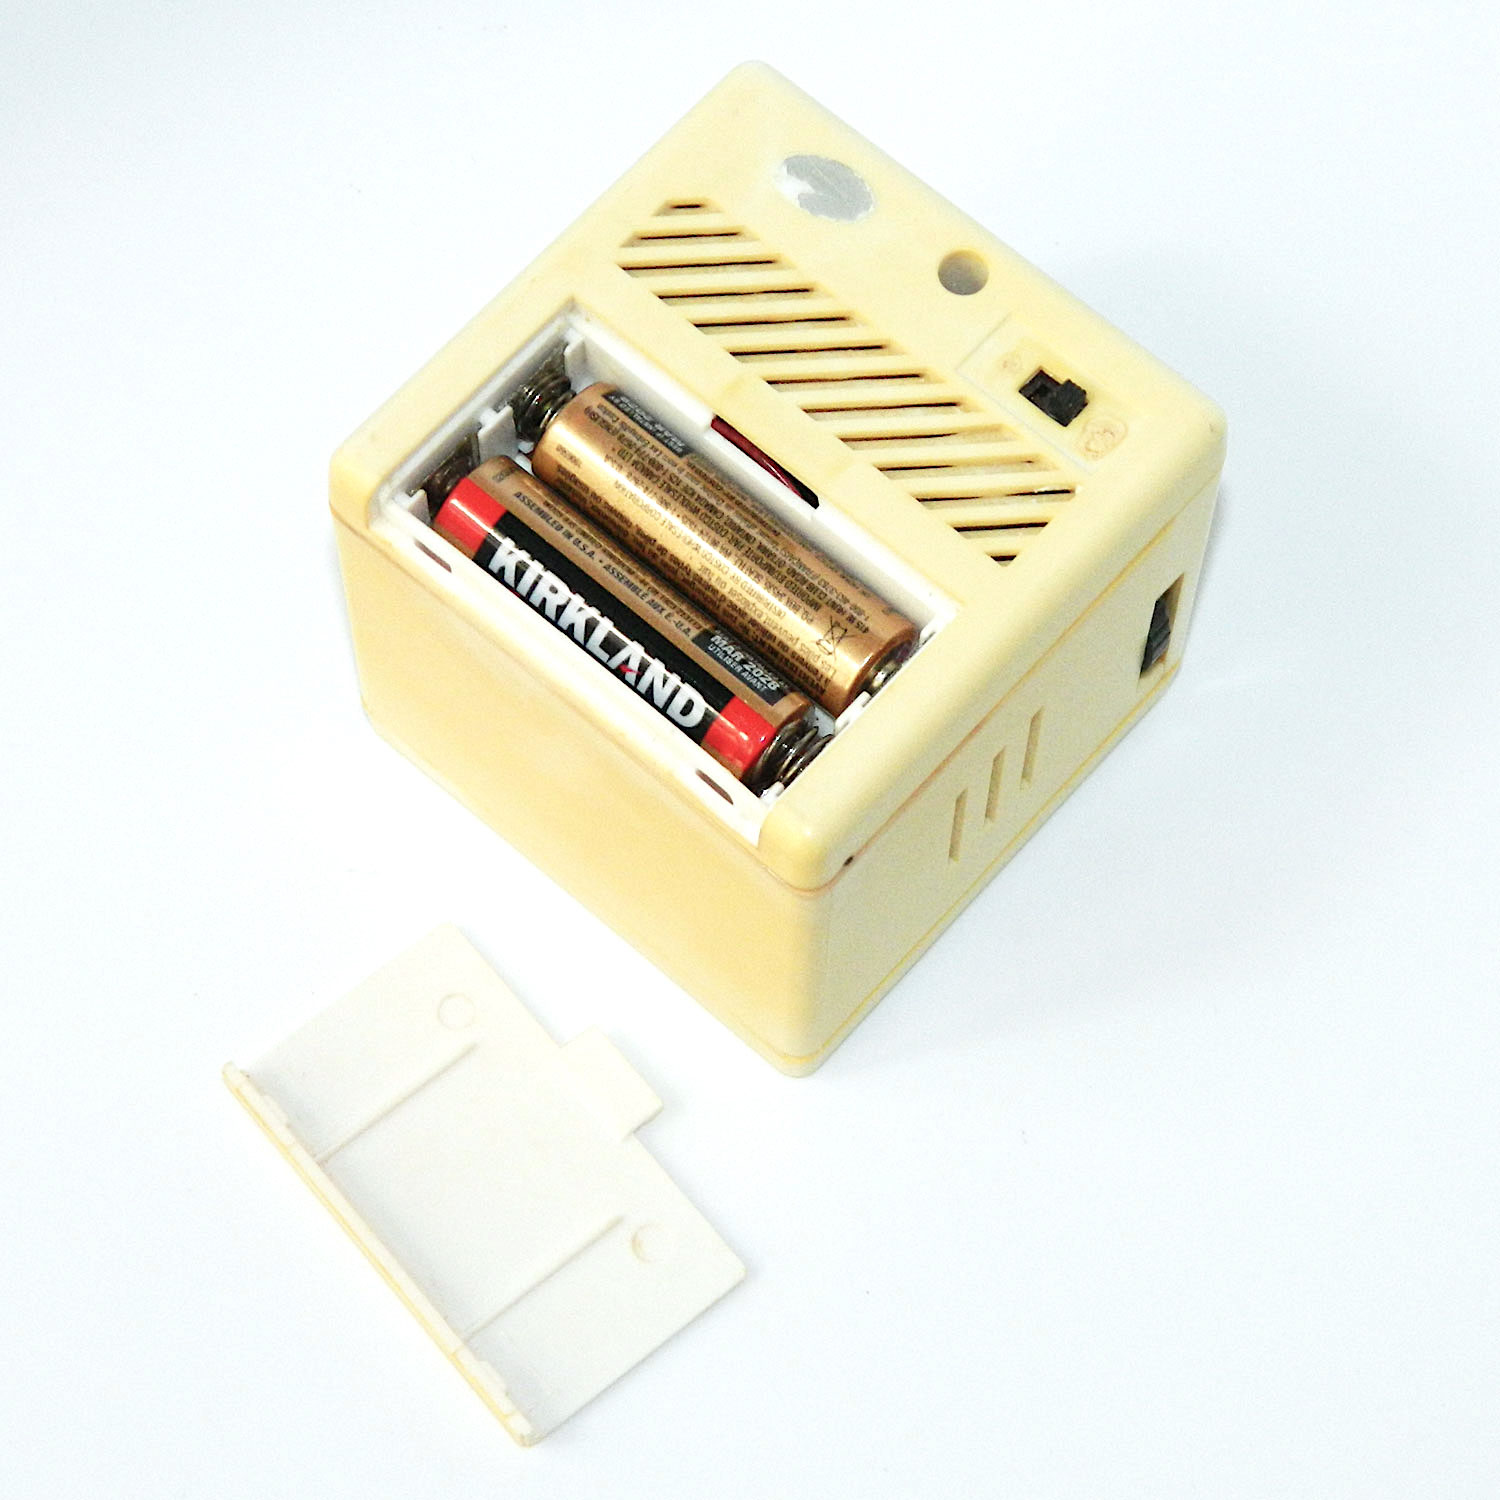 Vintage Sony Cube transistor radio